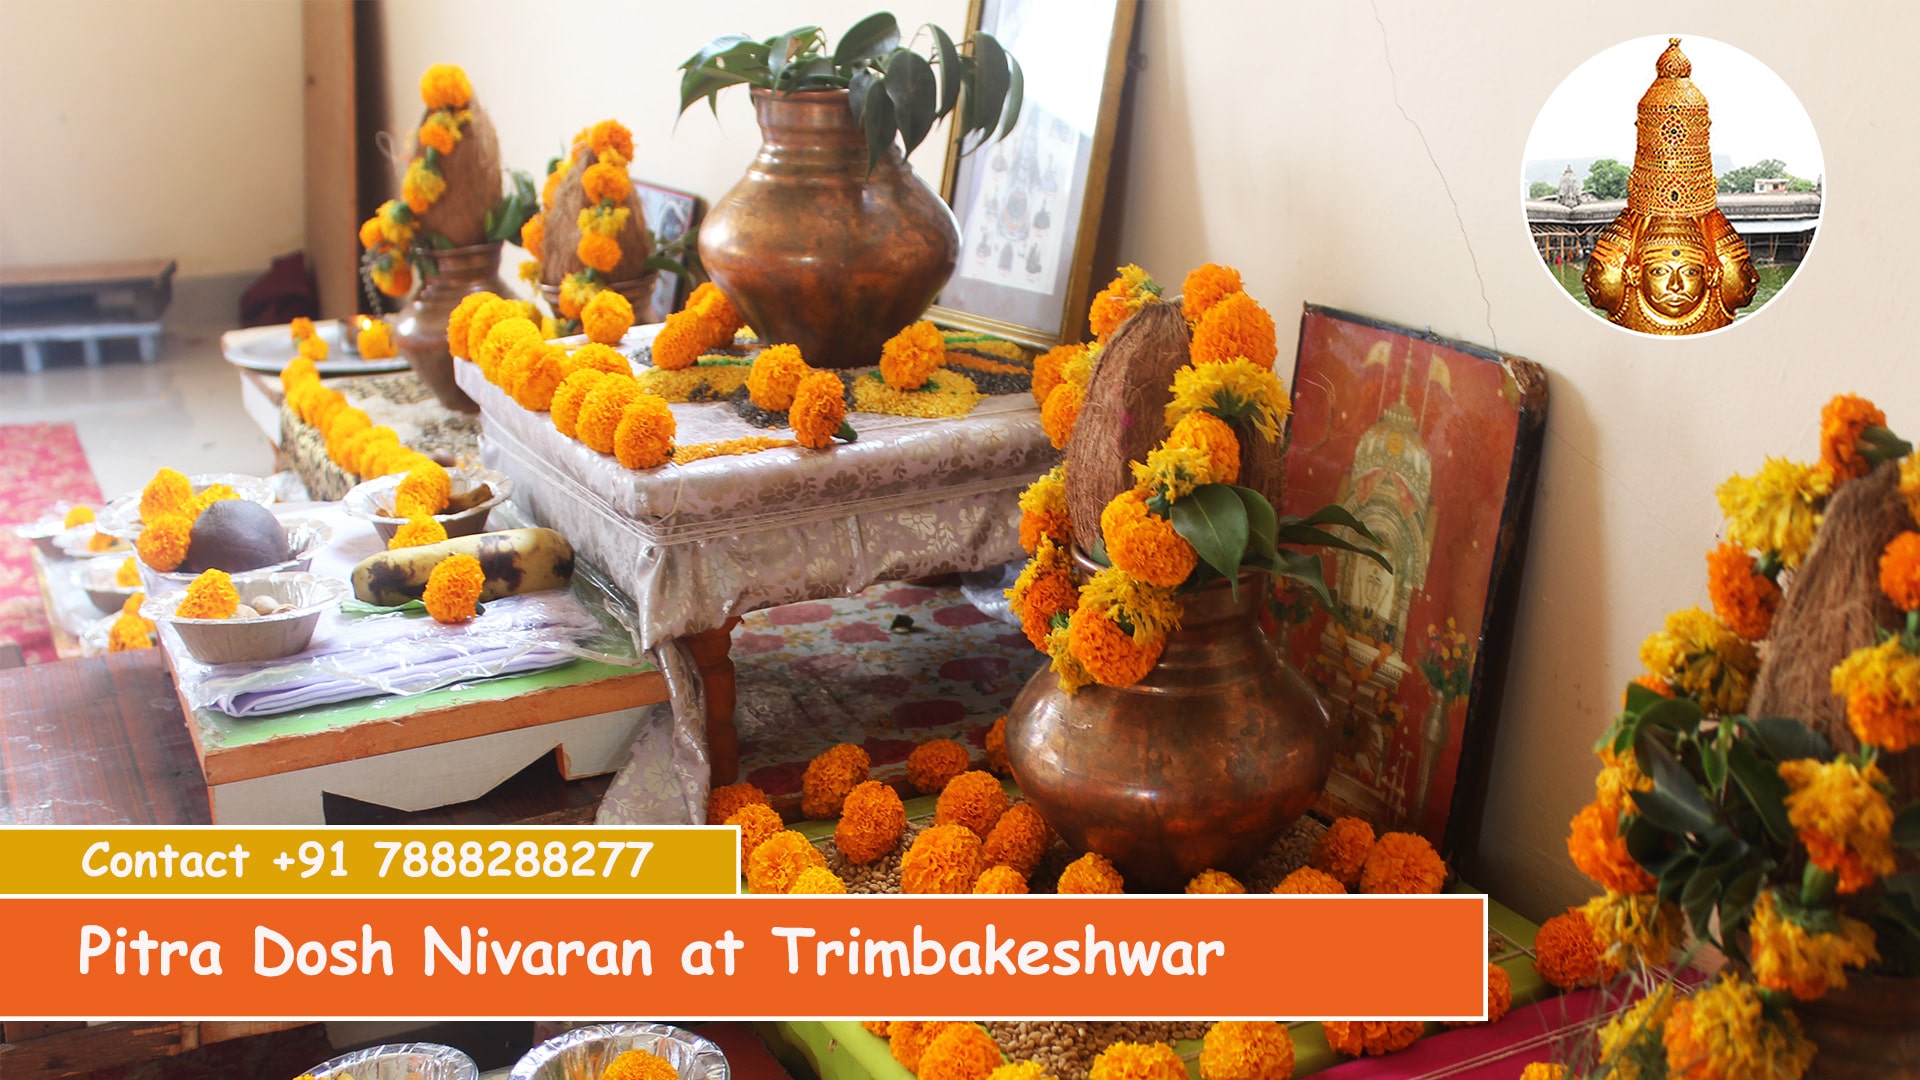 Pitra Dosh Nivaran Puja | Pitra Dosh Nivaran Puja in Kundali, Remedies, Cost, Effects | Pitra Dosh Remedies | Call Kishan Guruji 7888288277